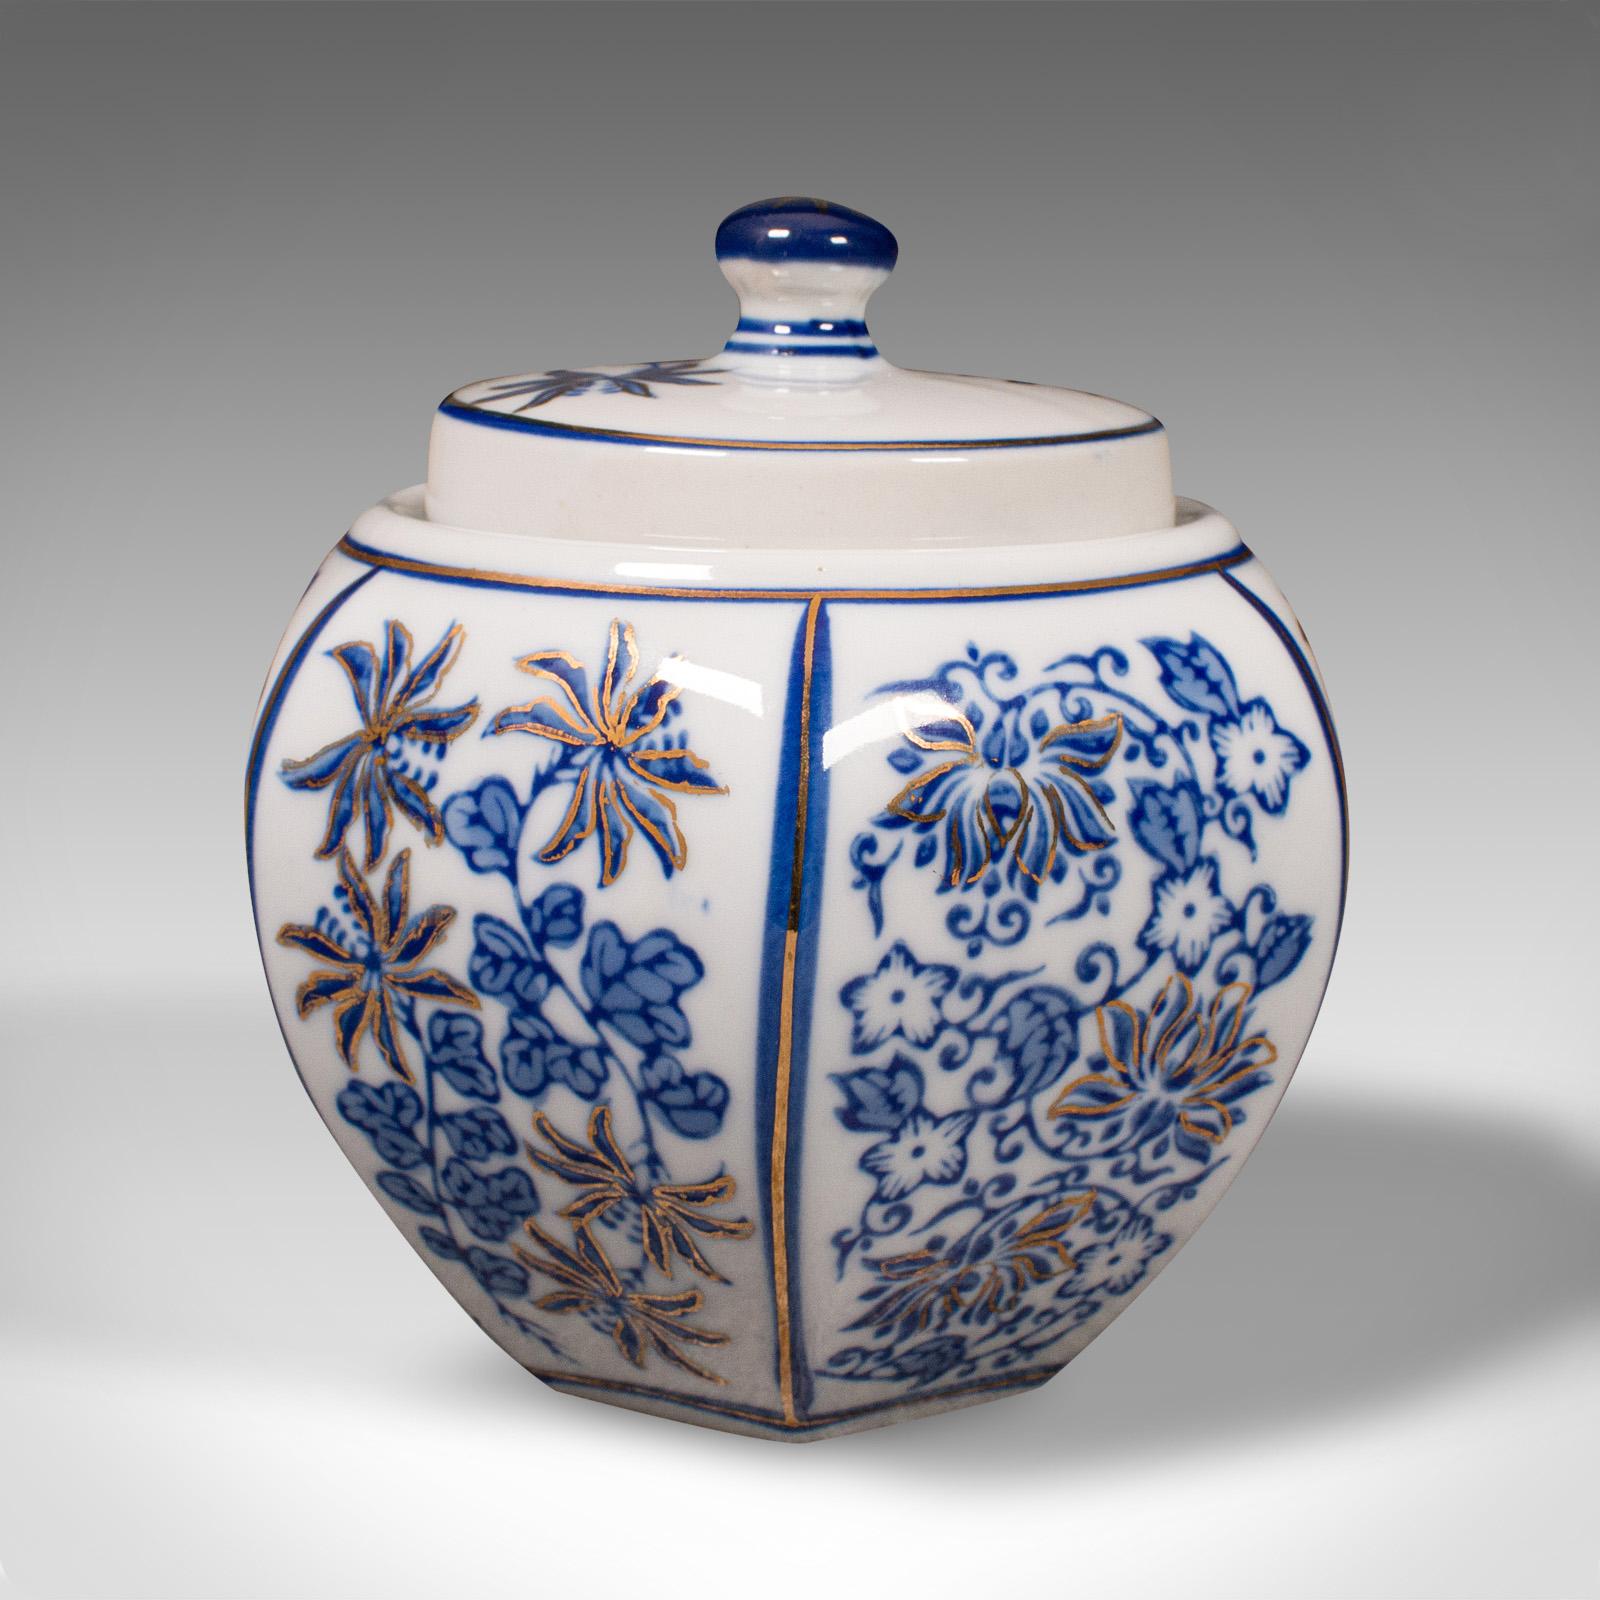 Vintage Blue and White Spice Jar, Chinese, Ceramic, Decorative Pot, Art Deco For Sale 2